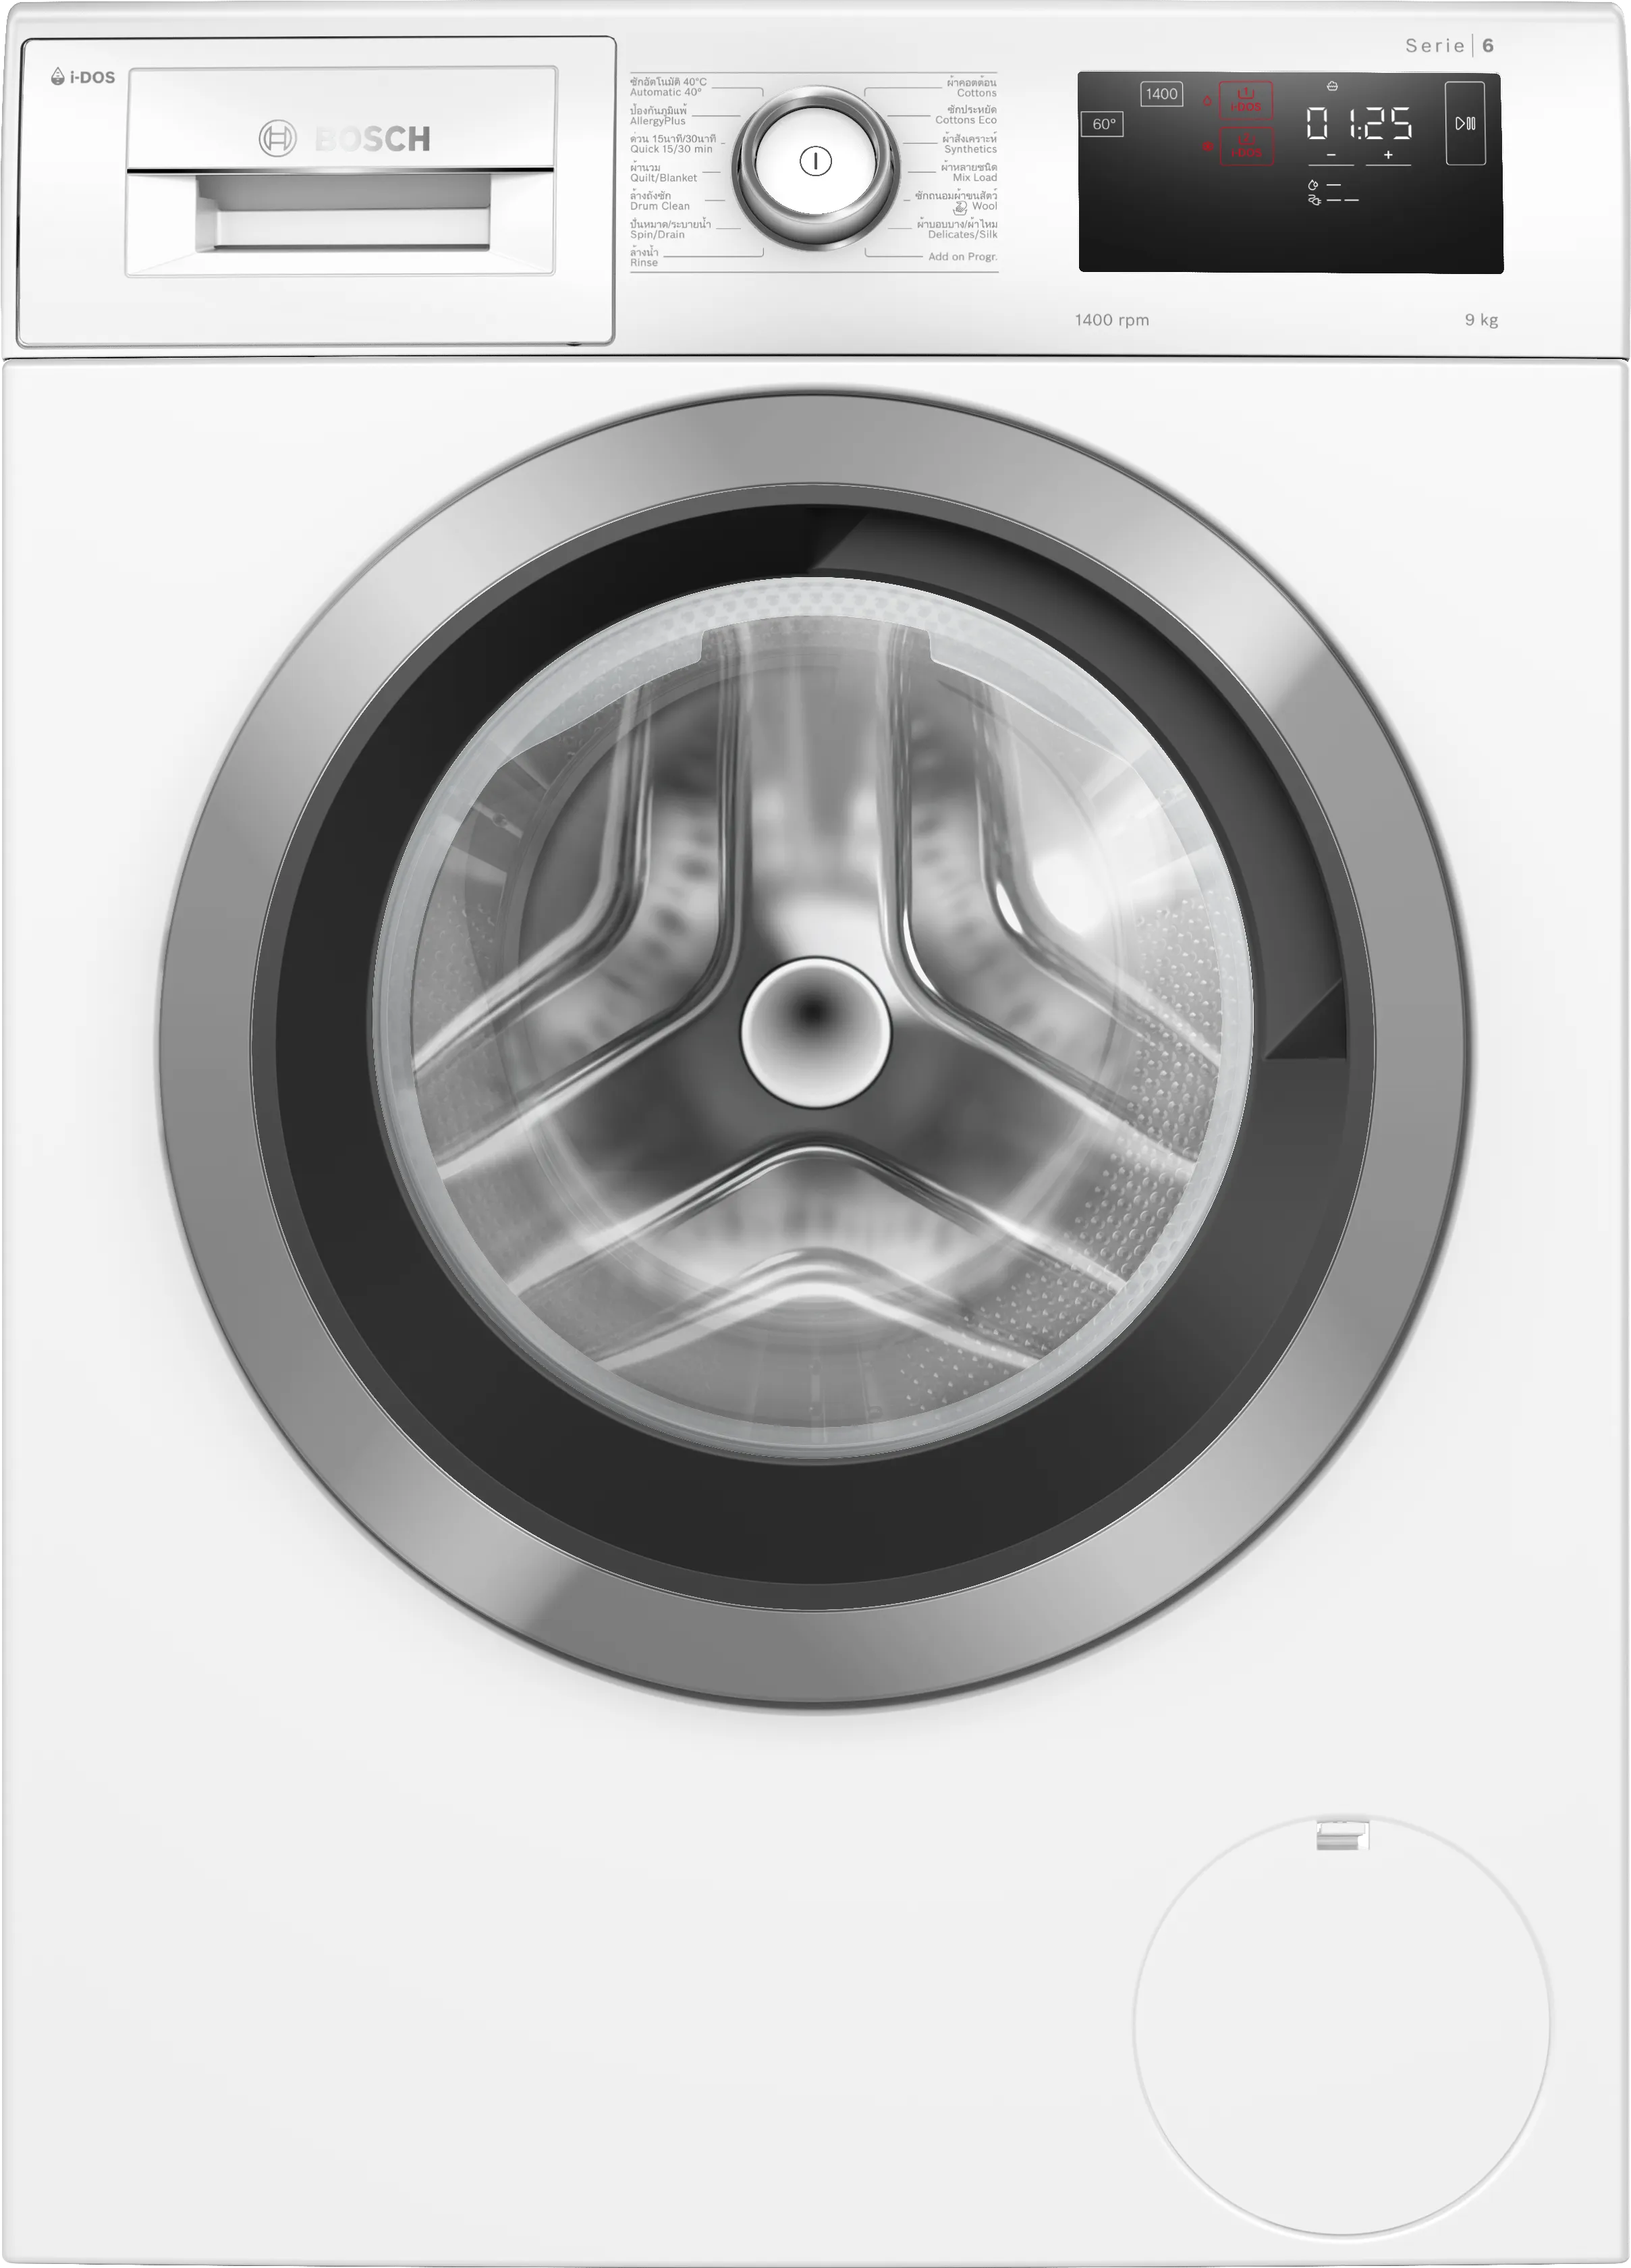 Series 6 washing machine, frontloader fullsize 9 kg 1400 rpm 